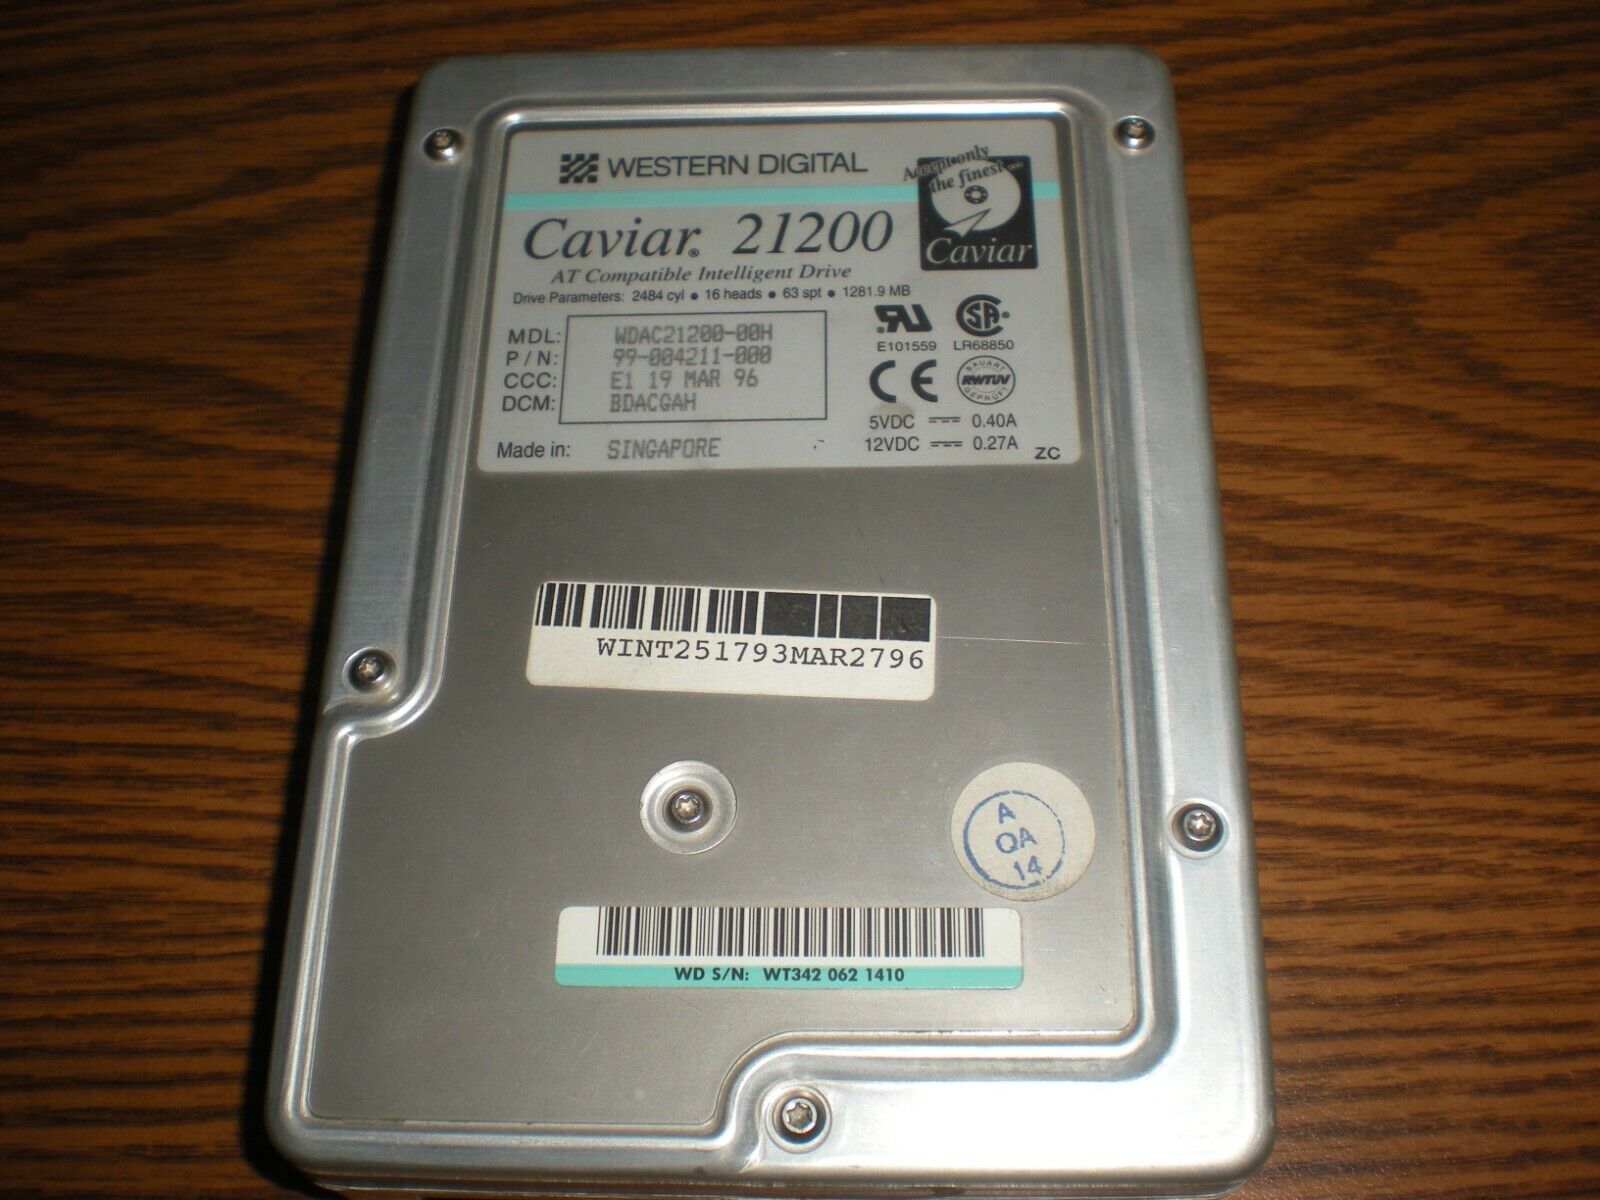 Vintage Hard Drive - Western Digital Caviar 21200 - 1.19 GB - Reformatted NTFS 2